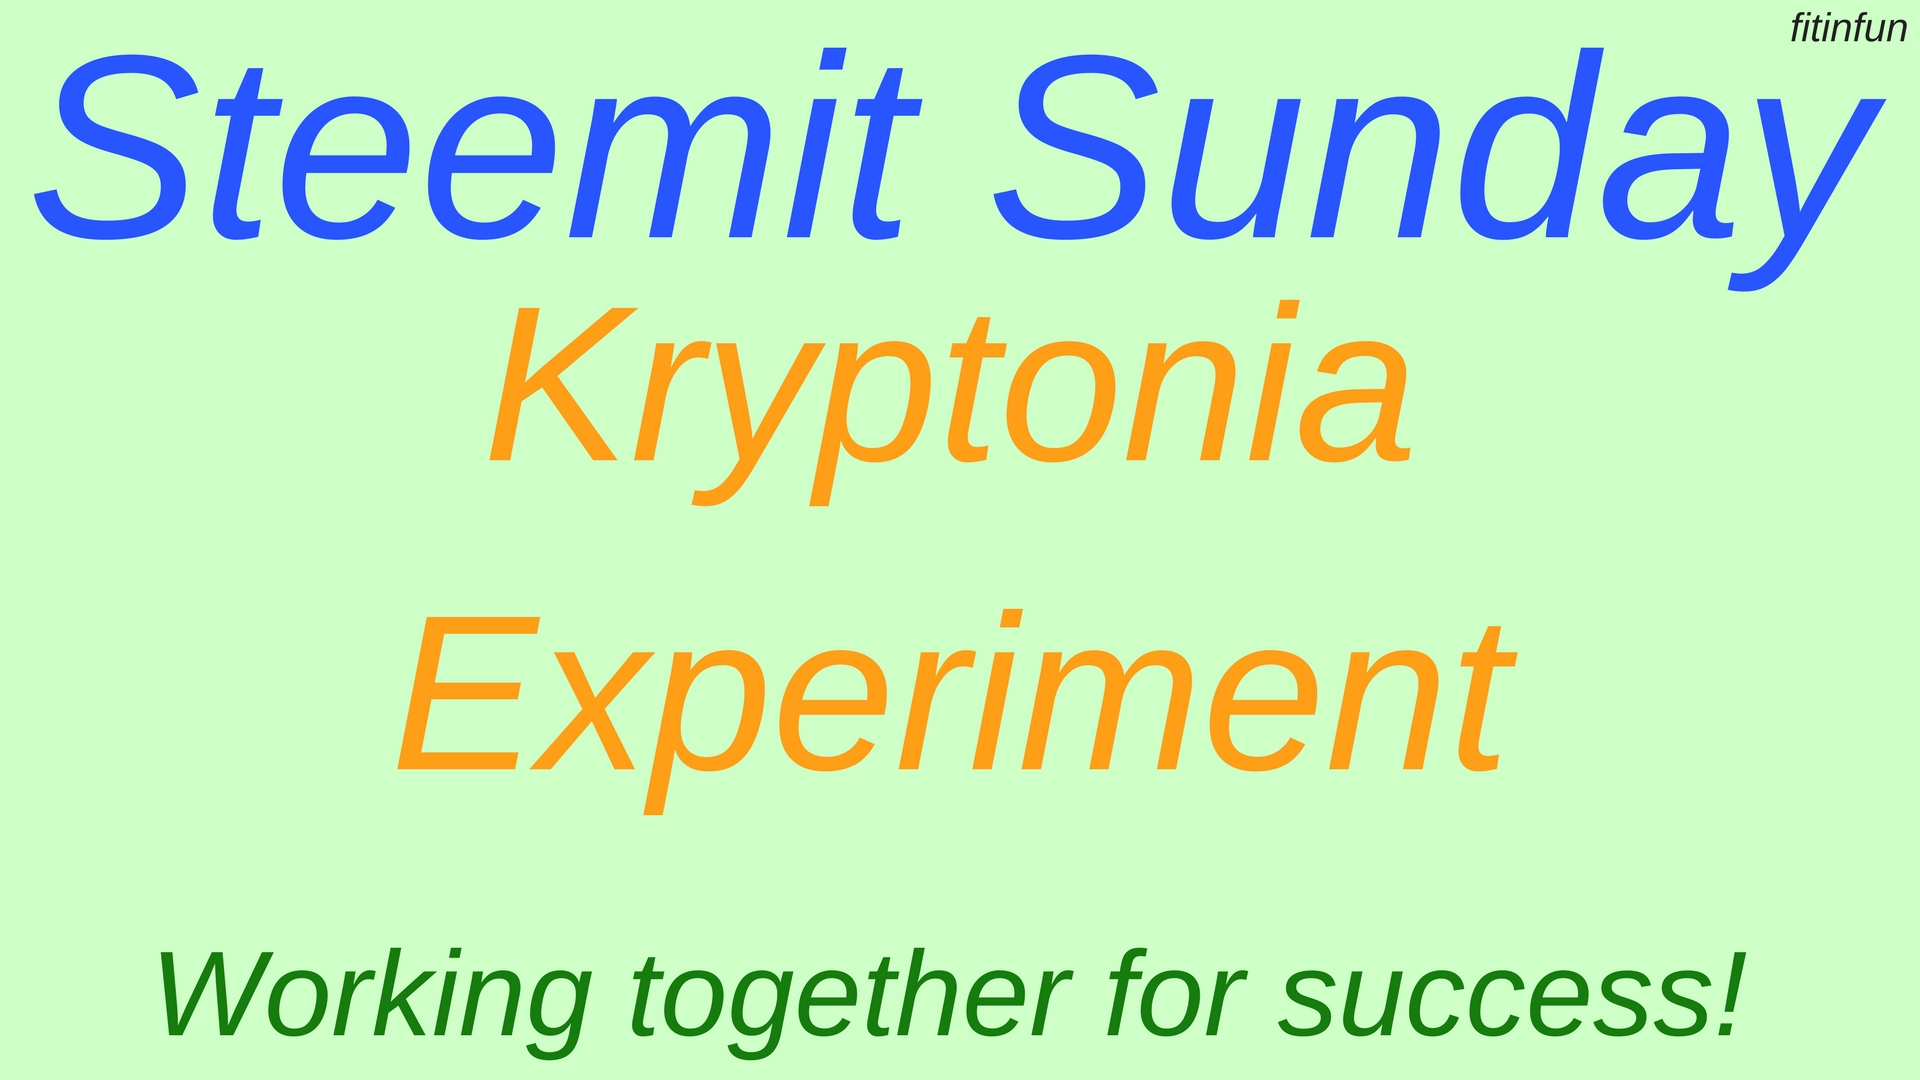 Steemit Sunday Kryptonia experiment success fitinfun.jpg